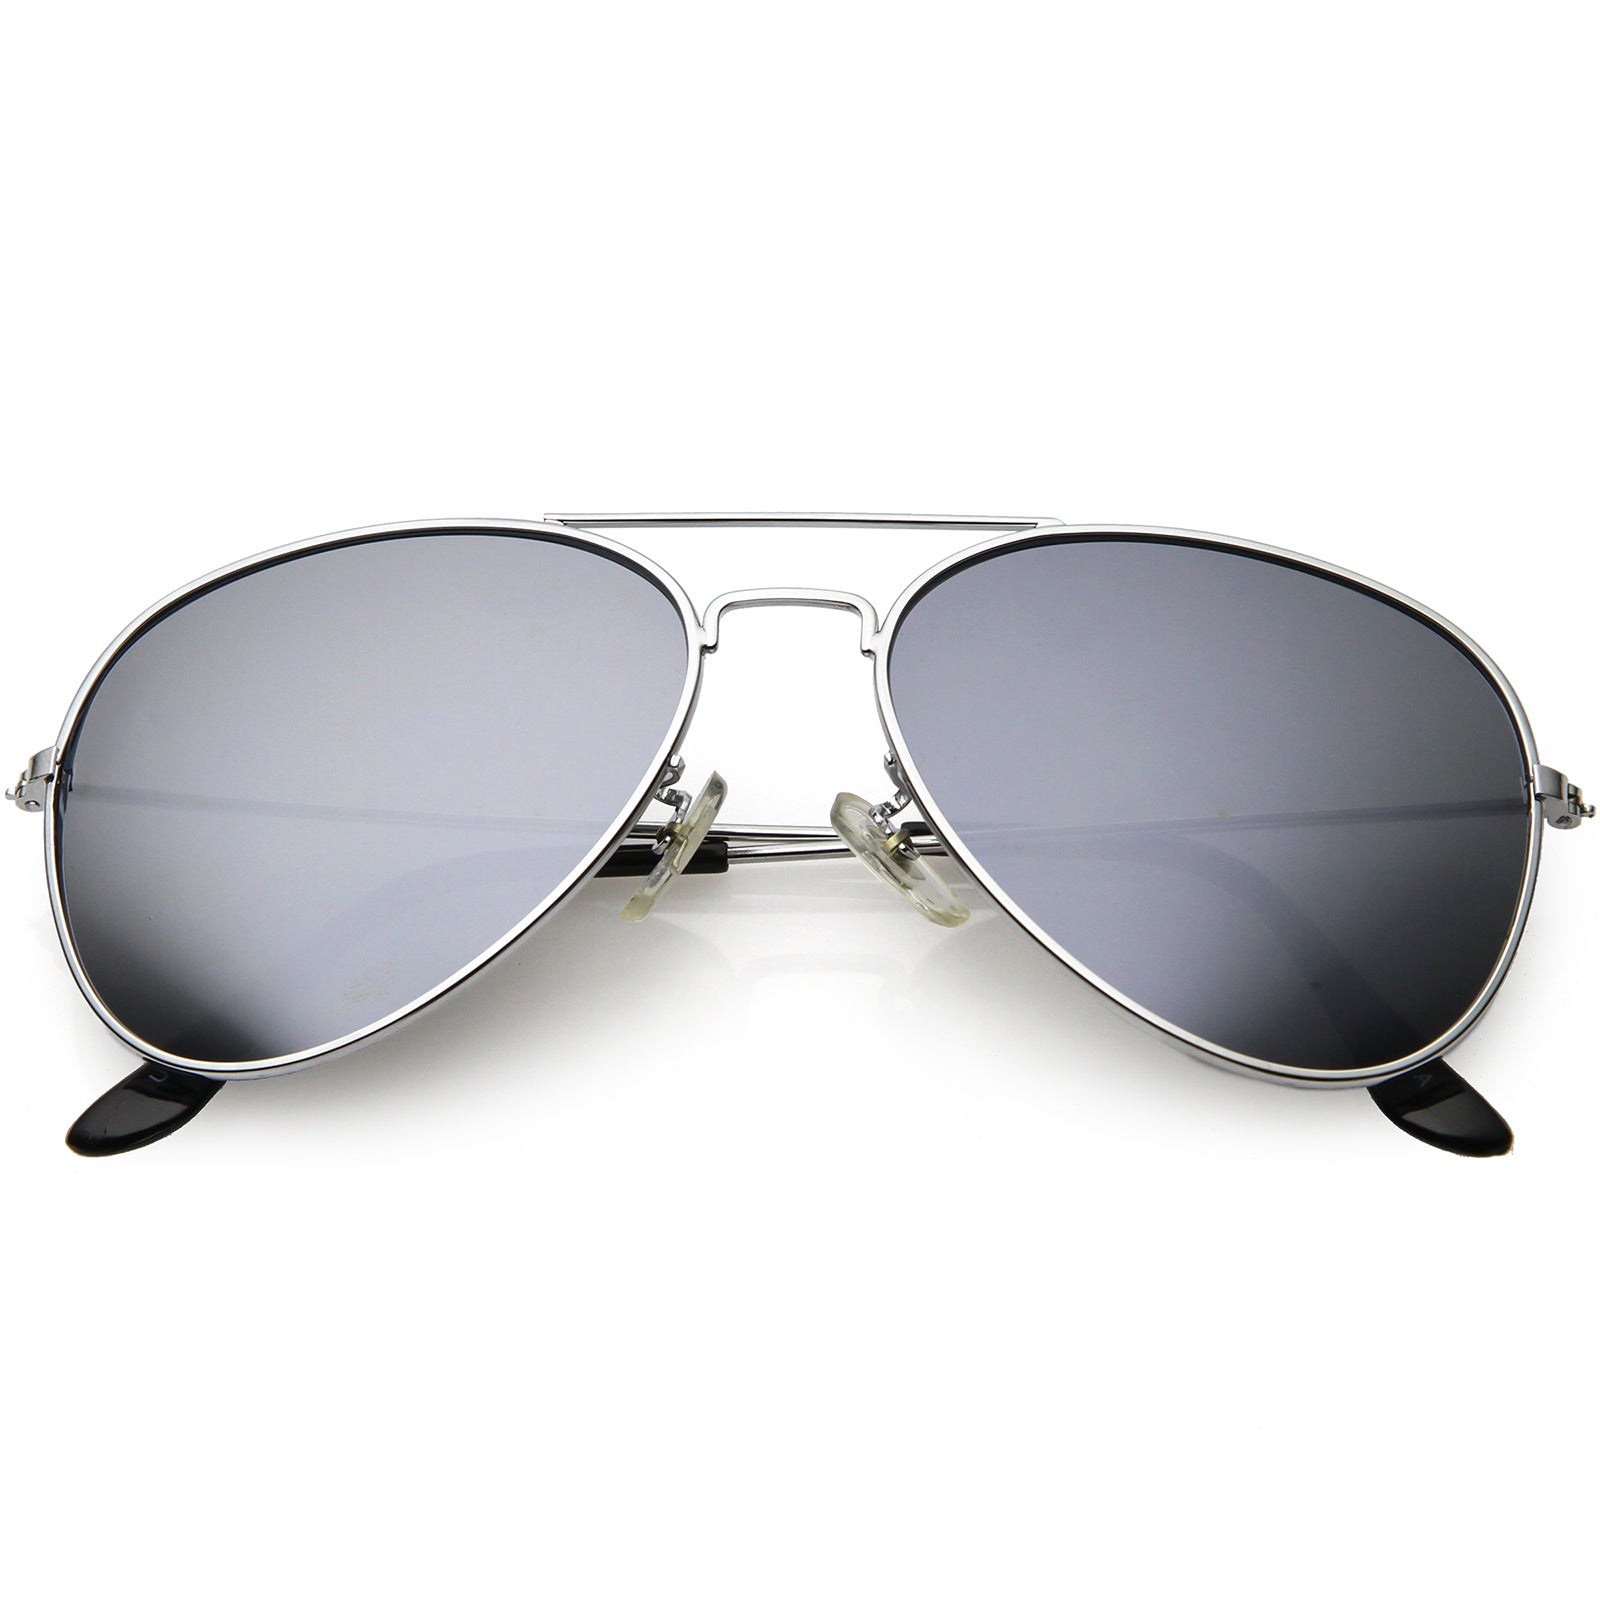 Wrap Around Silver / Mirrored Lens Sunglasses Black Lenses 